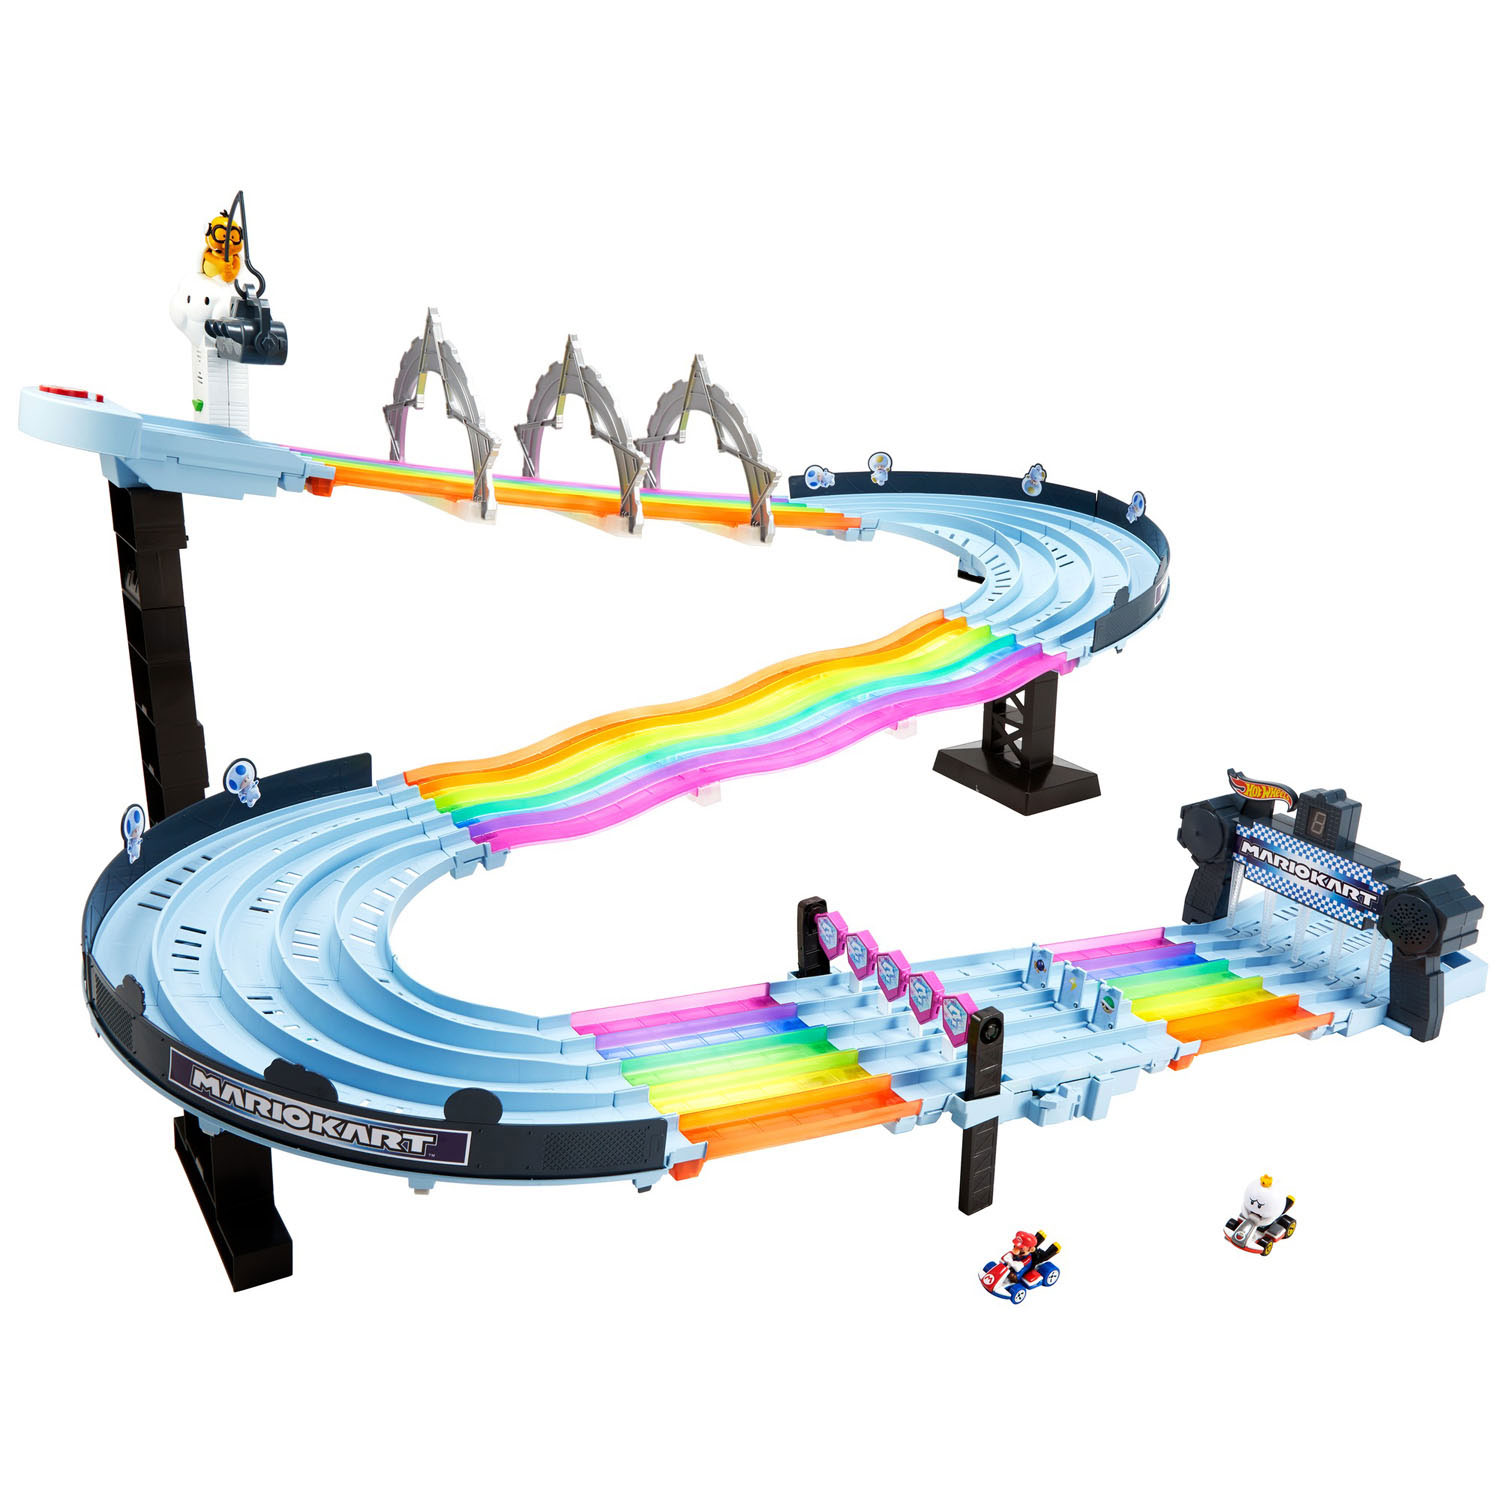 Hot Wheels Mario Kart Rainbow Racing Set Spielset